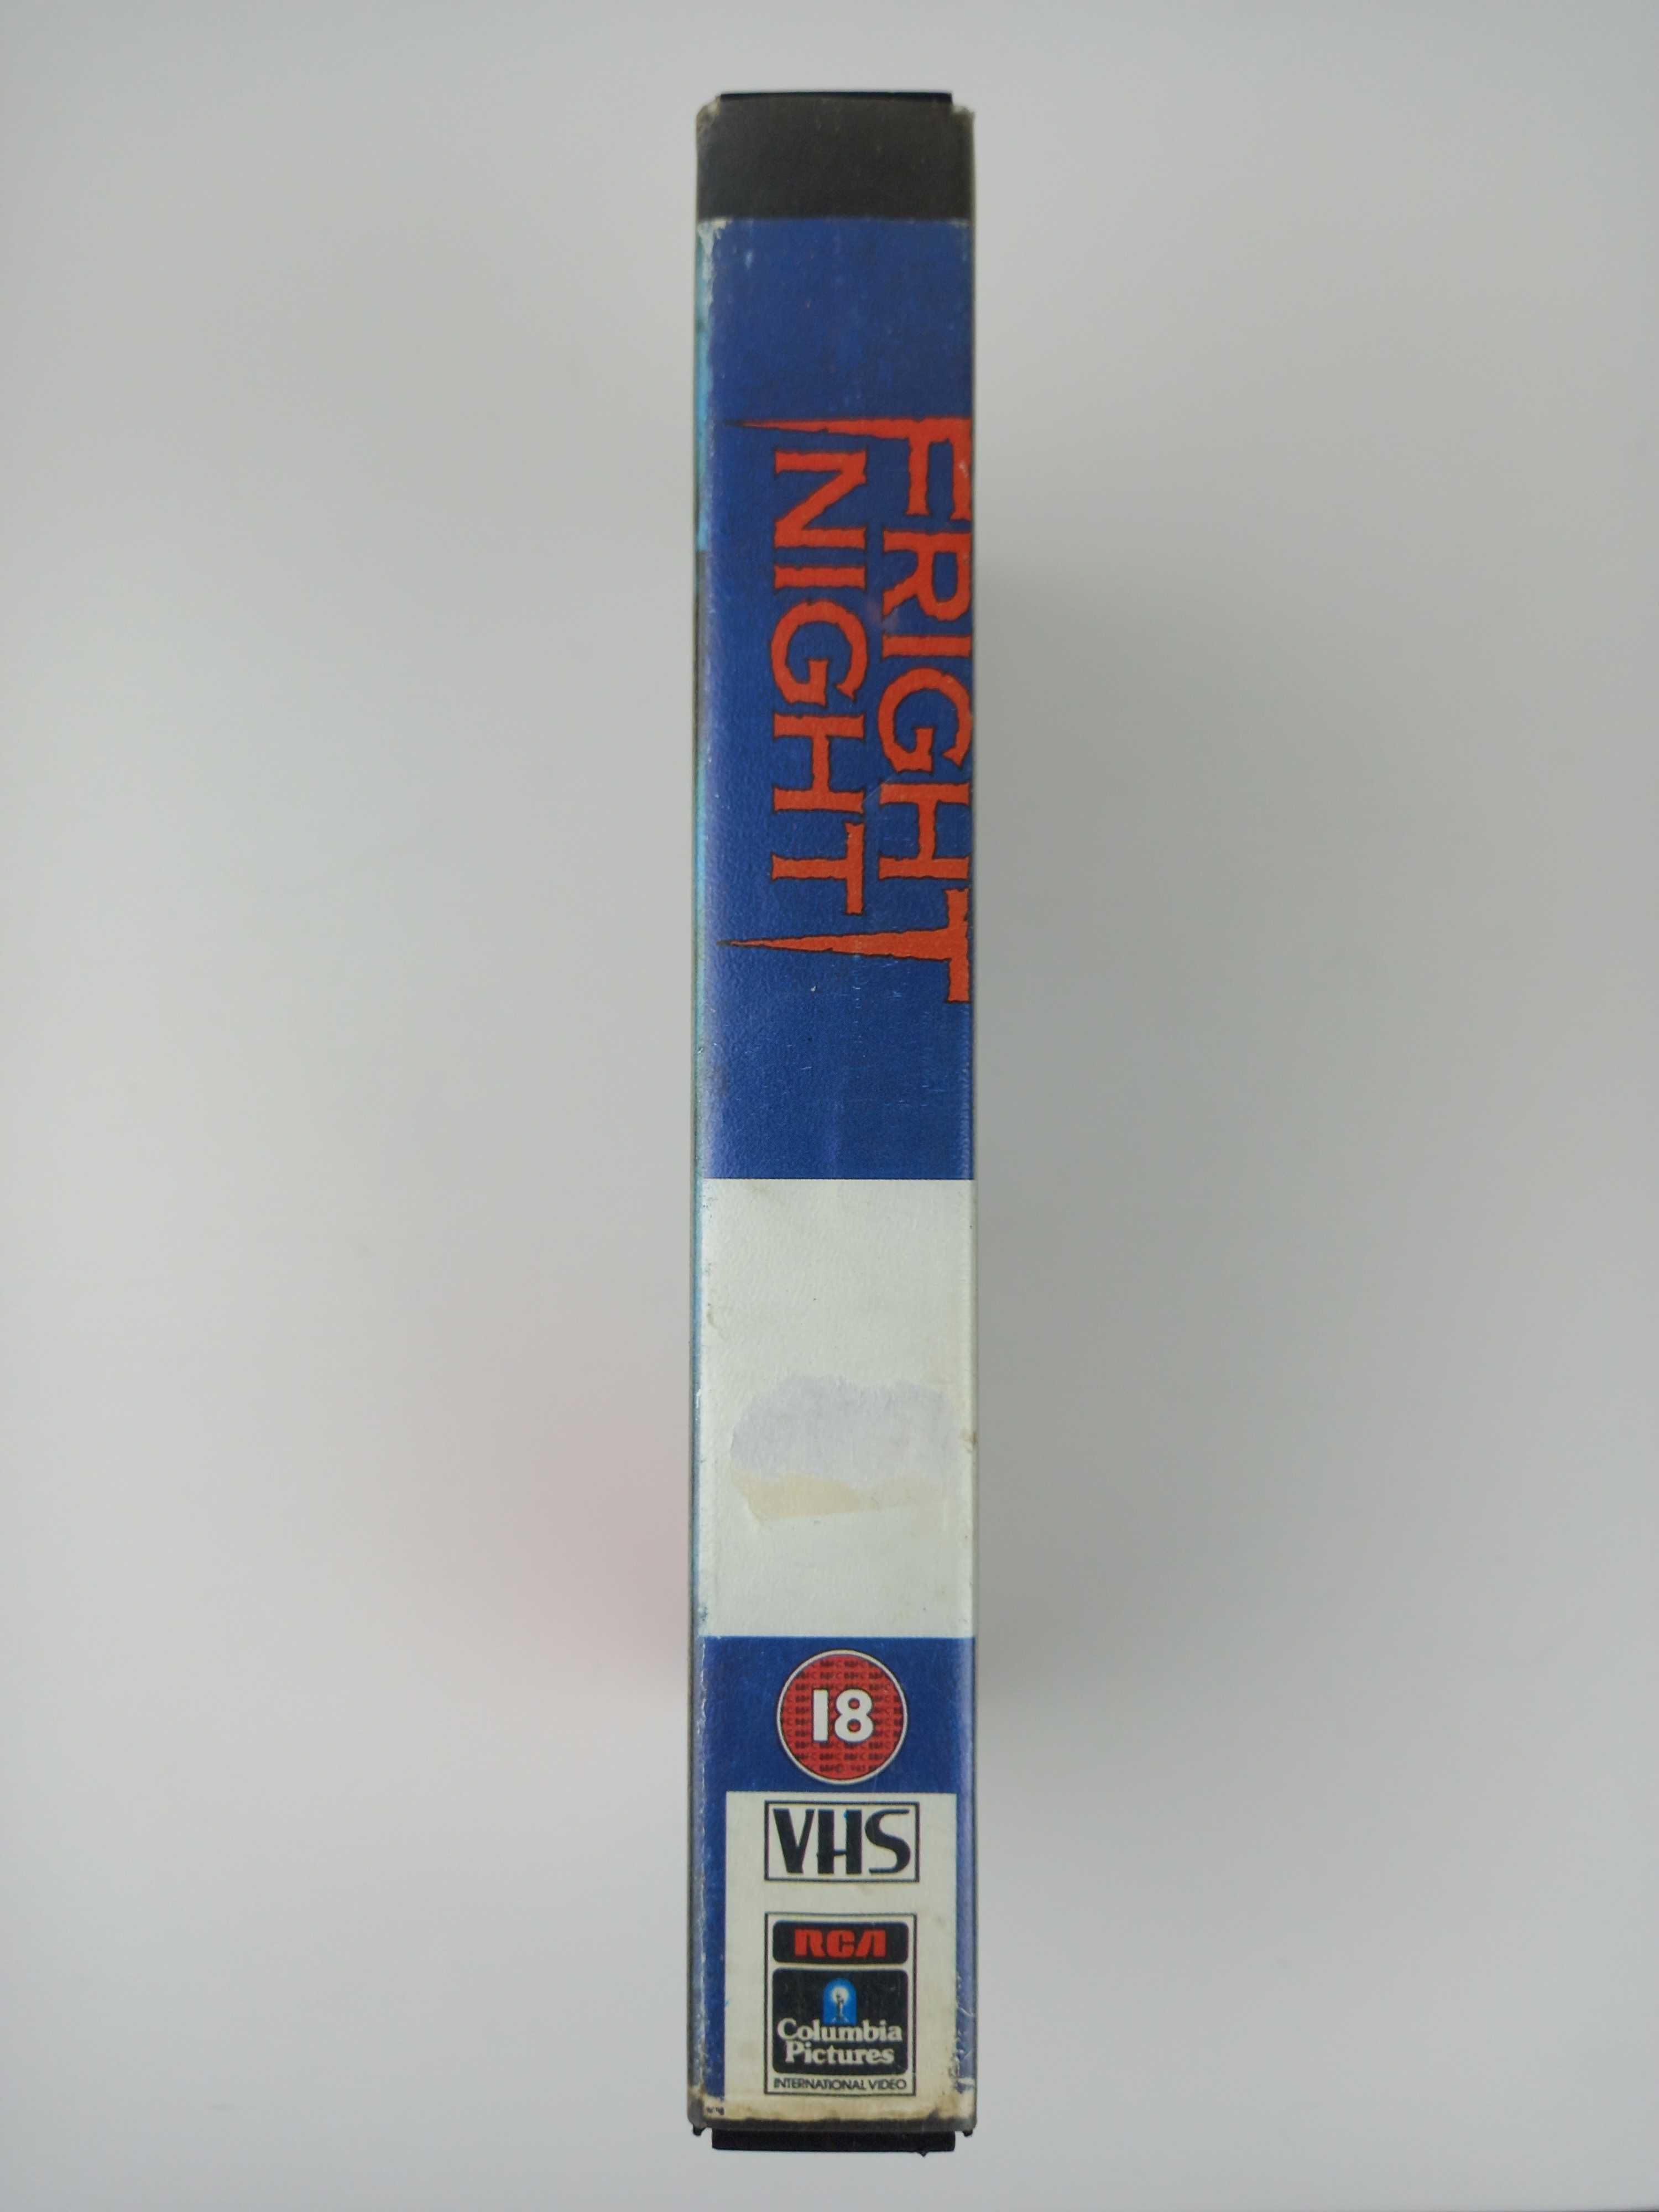 Postrach nocy (Fright night) horror 1985 - film na kasecie VHS